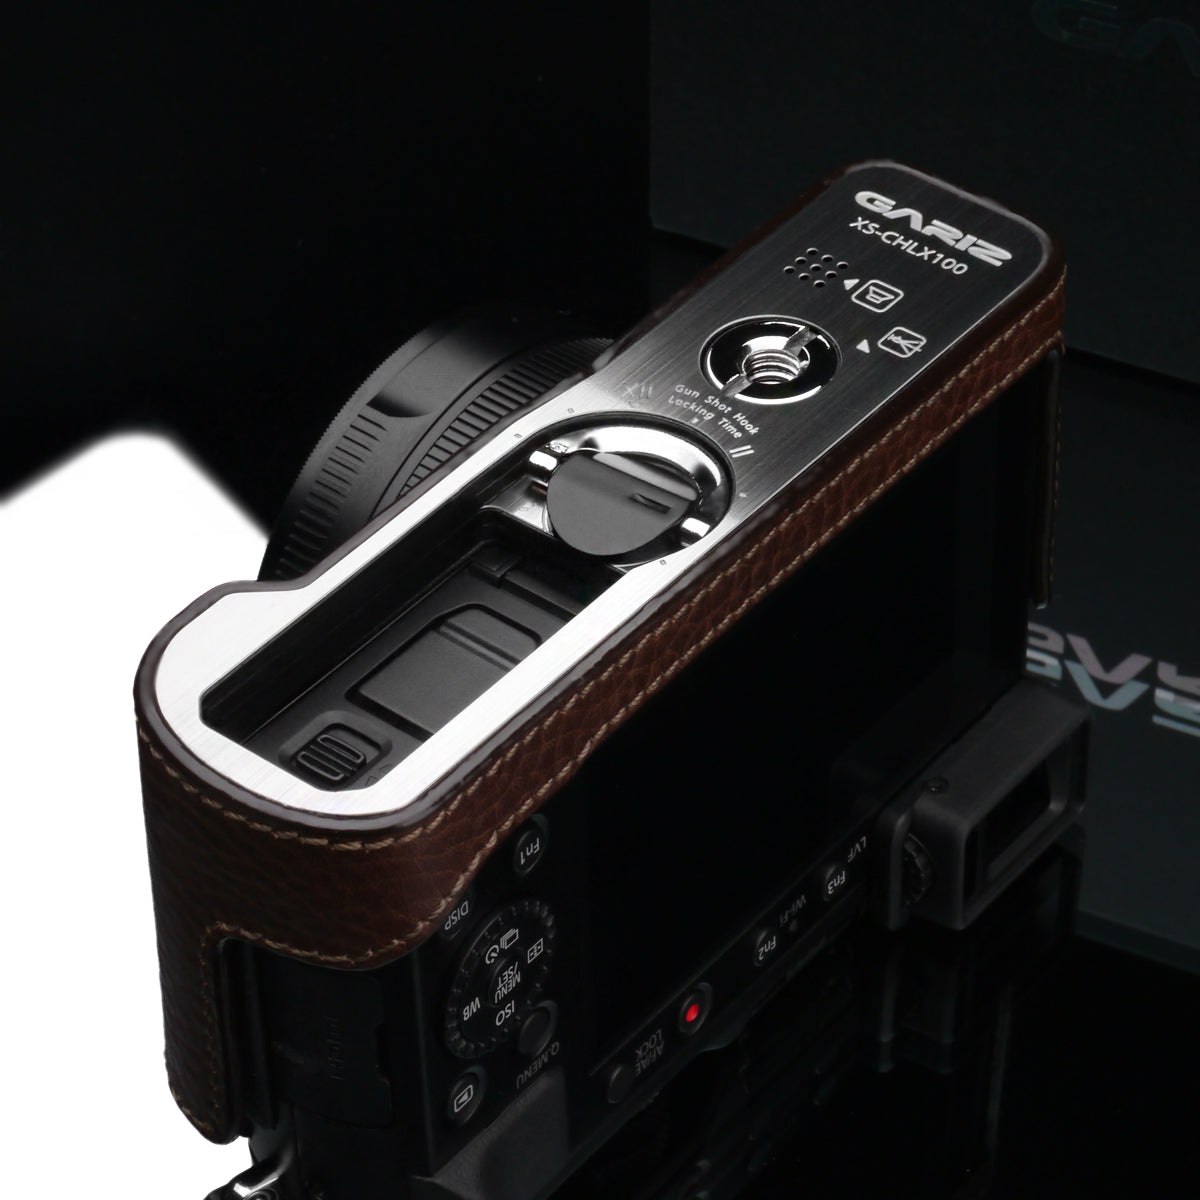 Gariz Brown Leather Camera Half Case XS-CHLX100BR for Lumix LX100 DMC-LX100